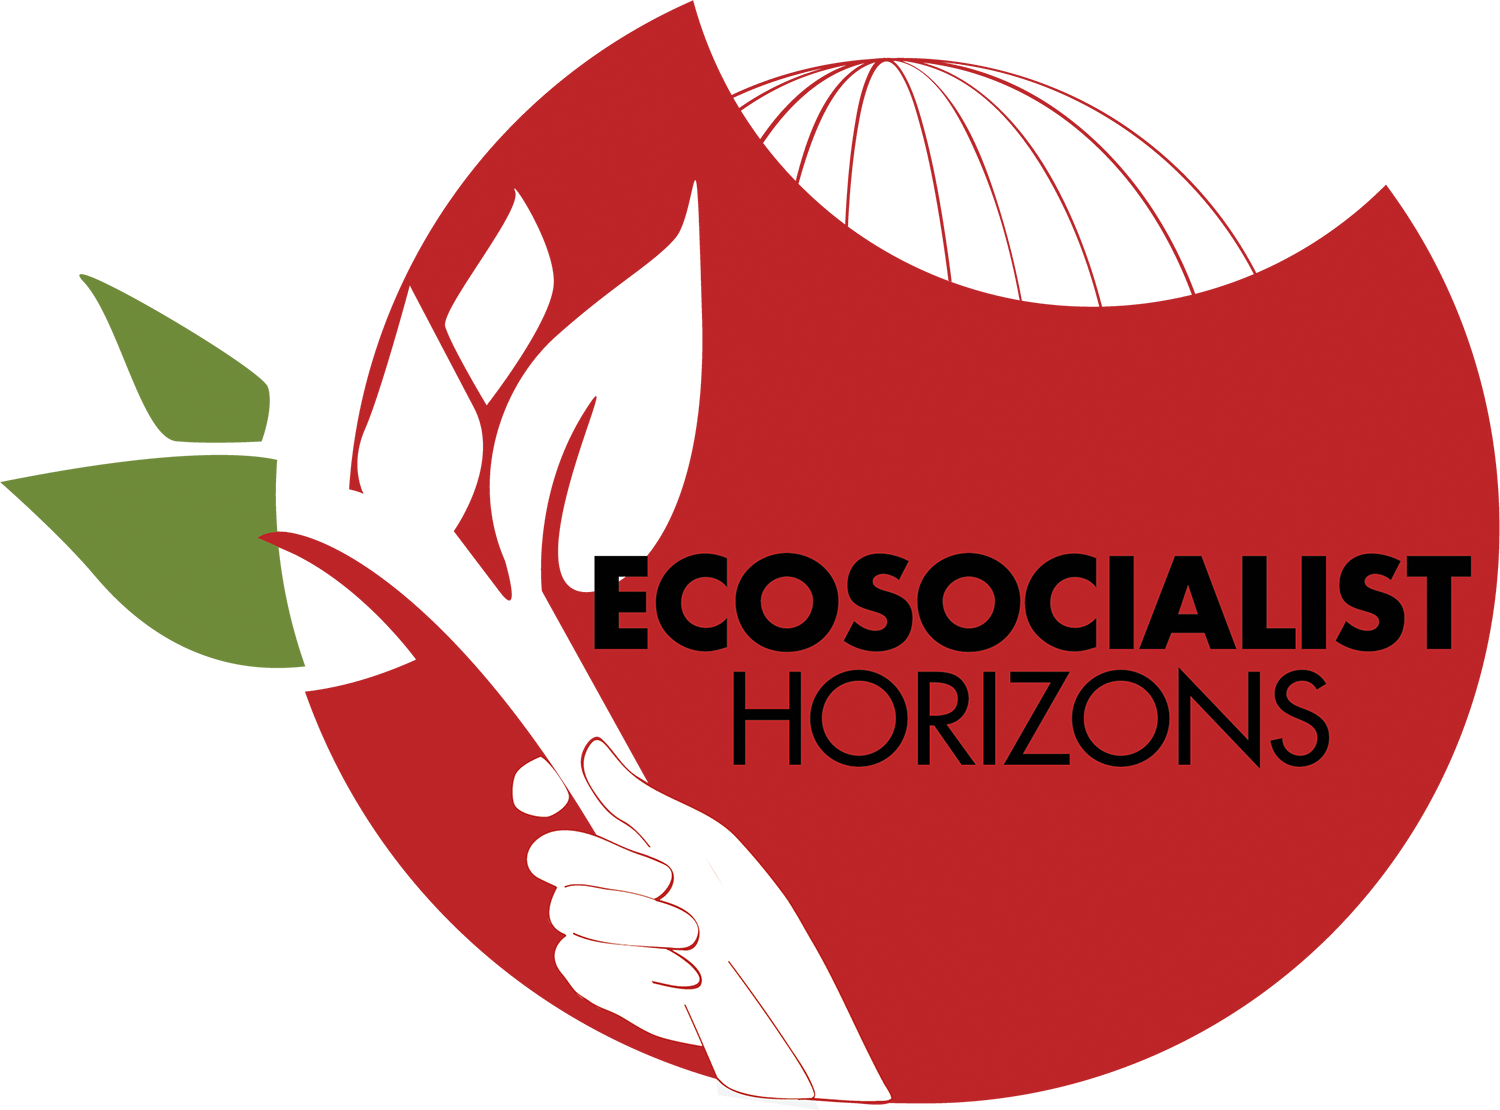 Ecosocialist Horizons